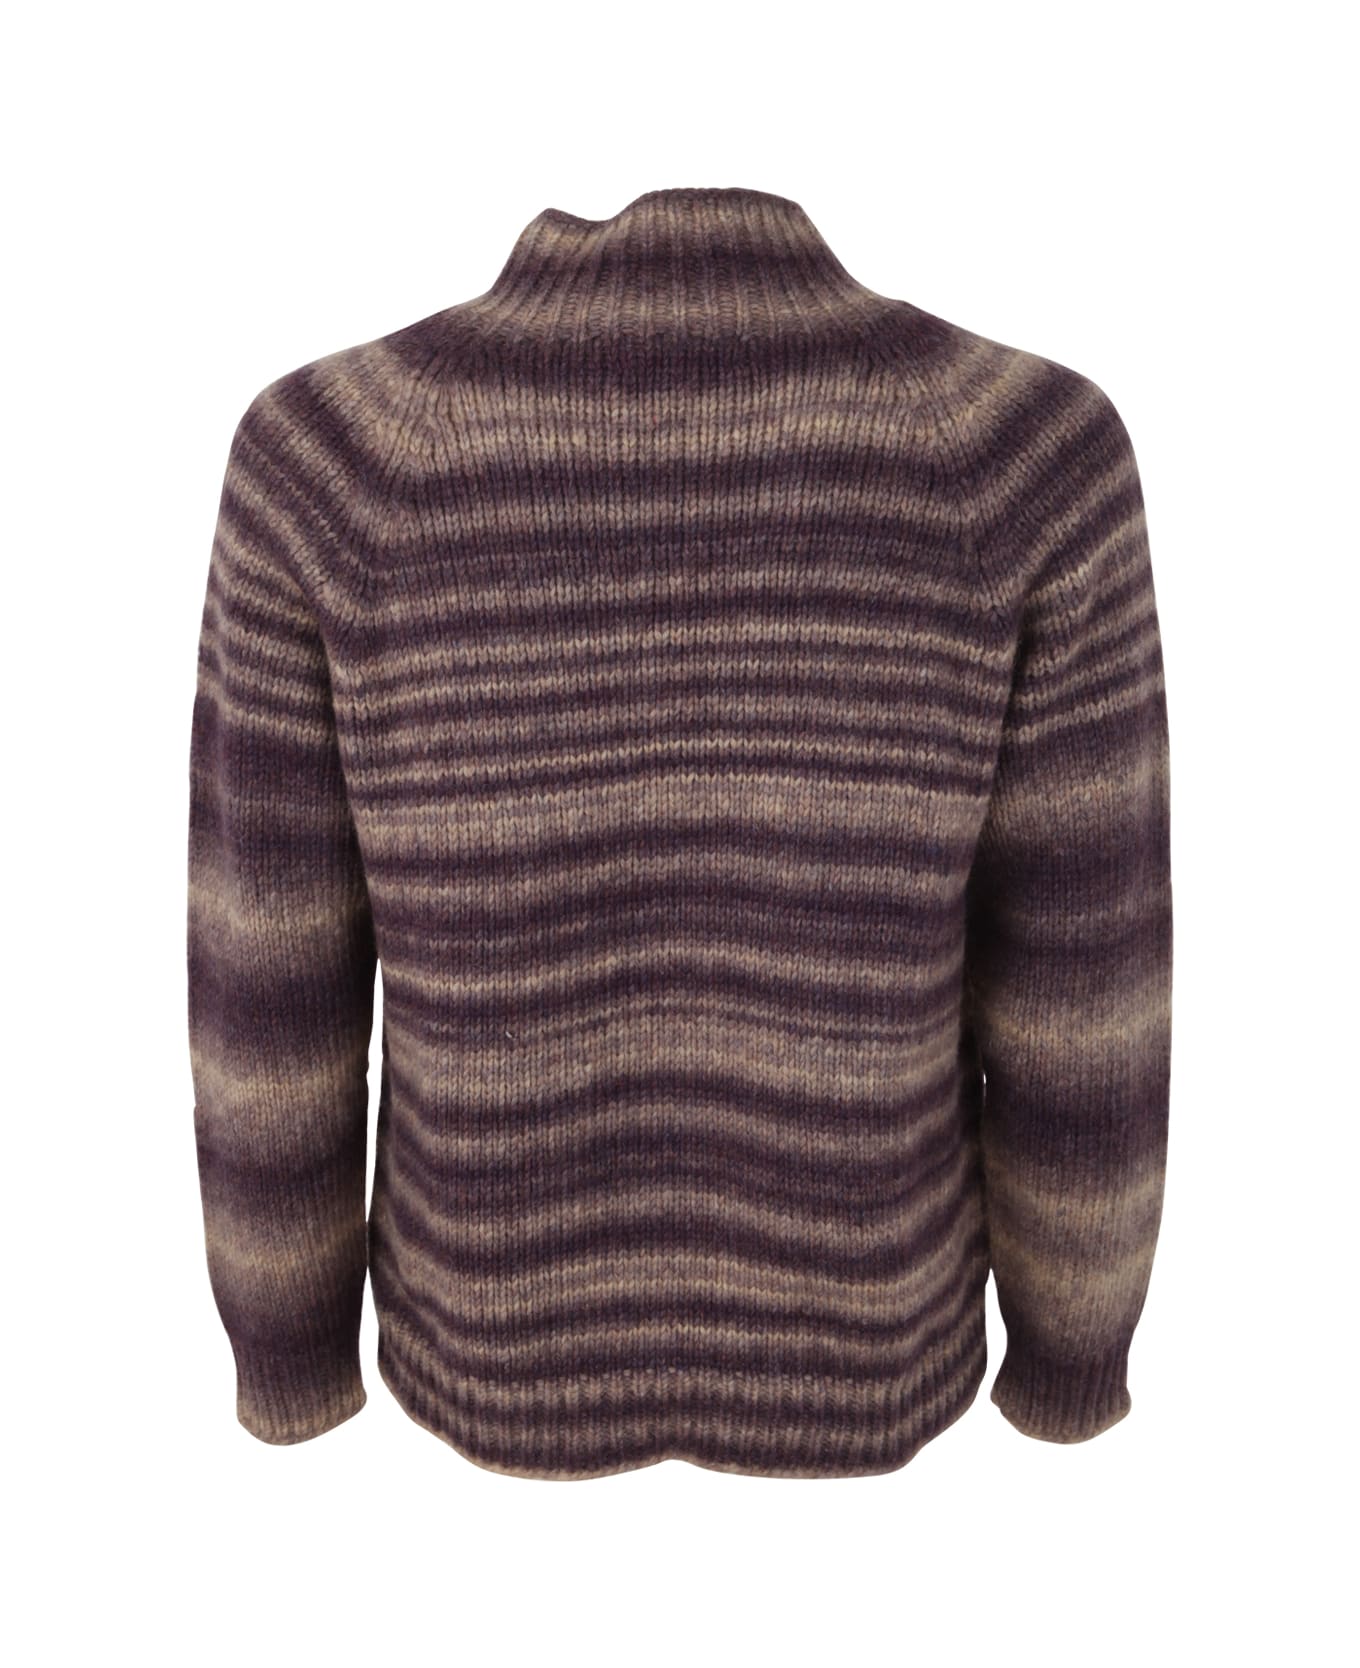 Lardini Man Knit Sweater - Be ニットウェア